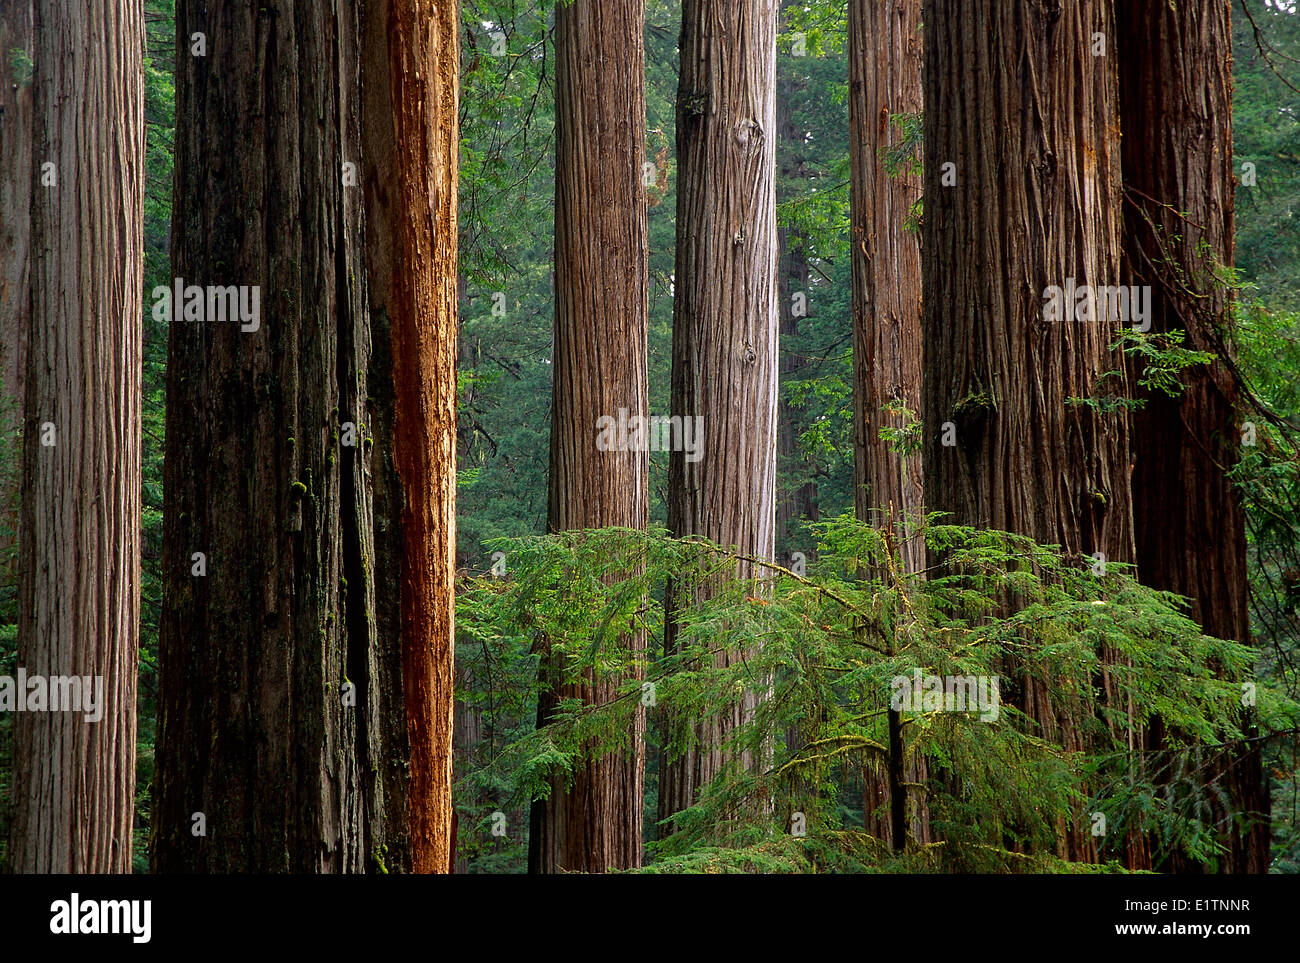 Coastal Redwood, Sequoia sempervirens, California settentrionale, Prairie Creek Redwoods National Park, STATI UNITI D'AMERICA Foto Stock